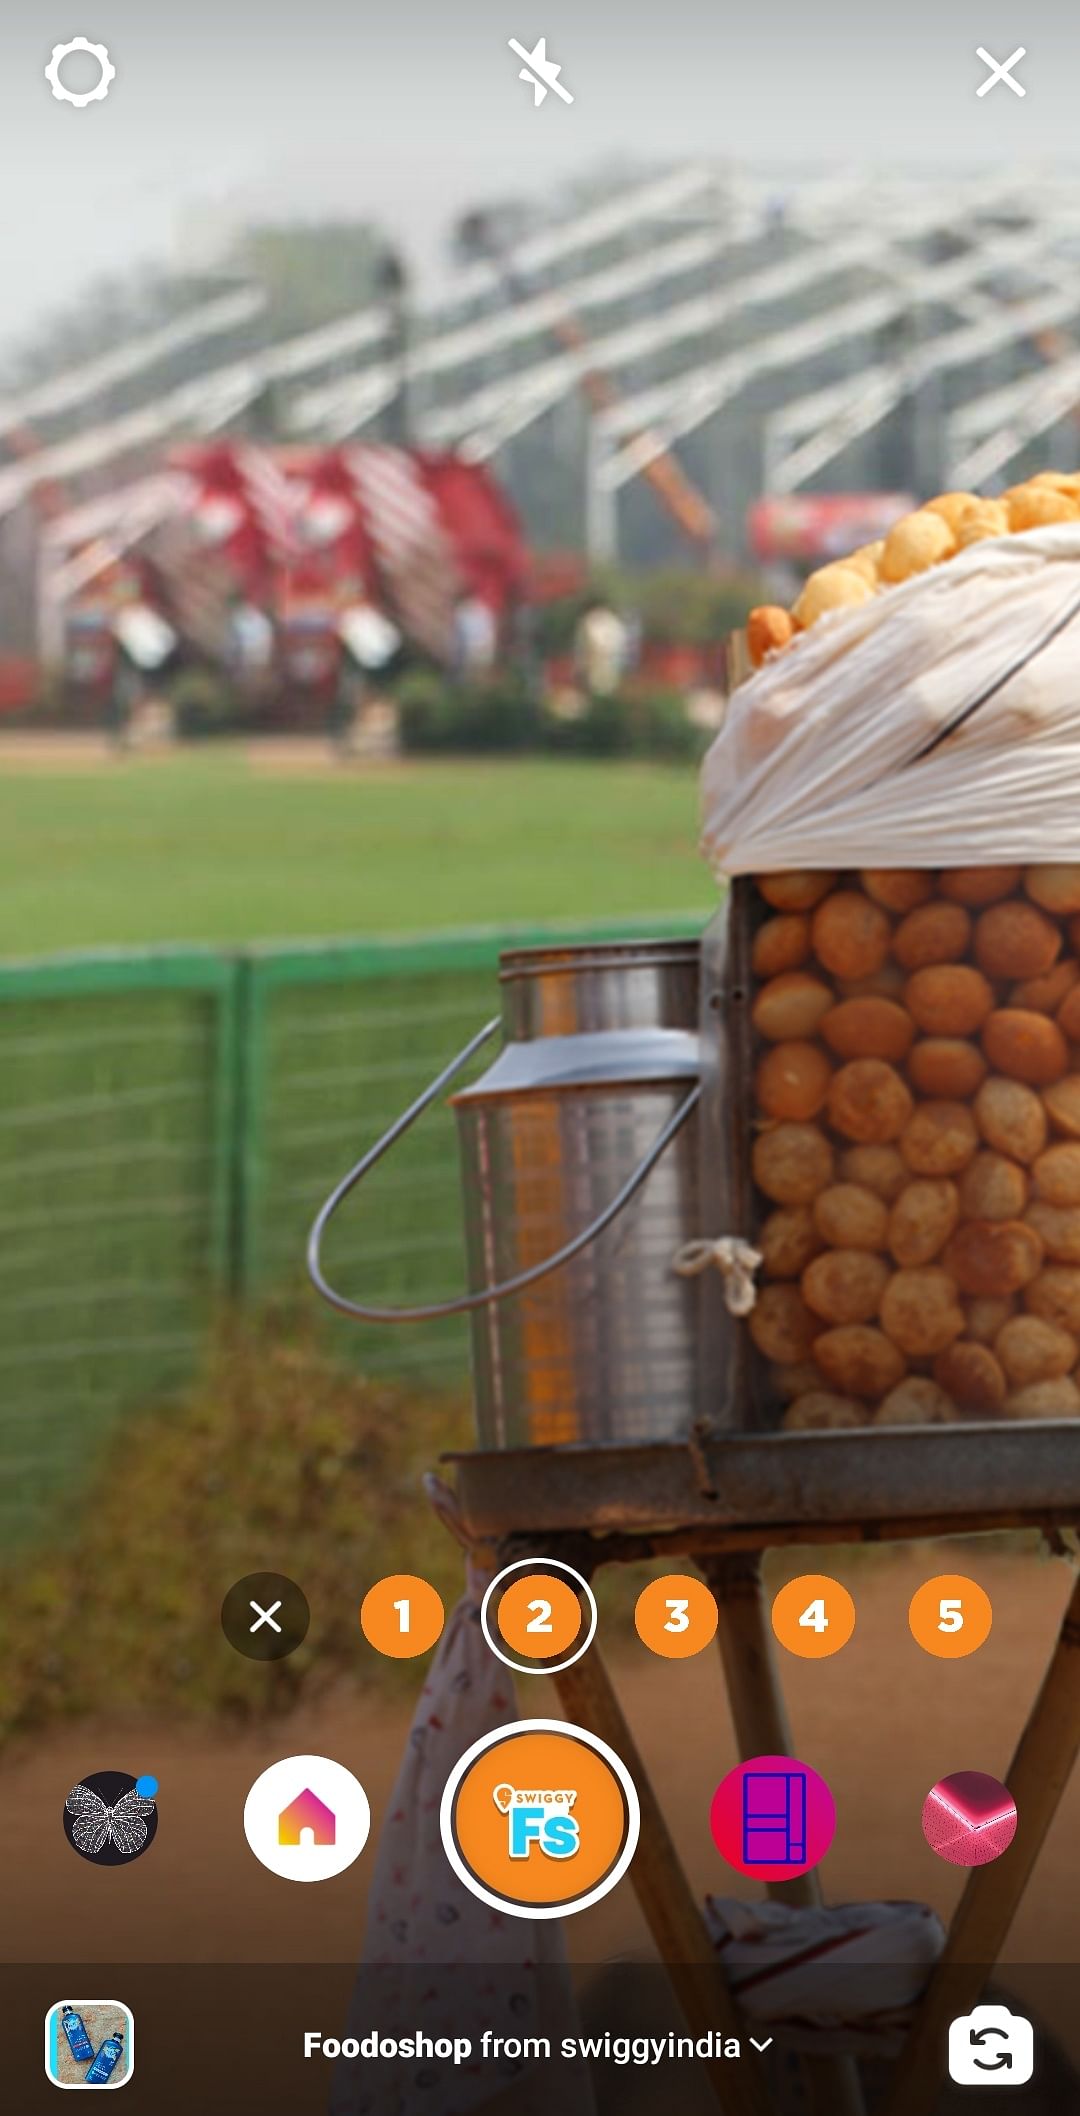 Swiggy introduces 'Foodoshop' campaign via an Instagram AR lens